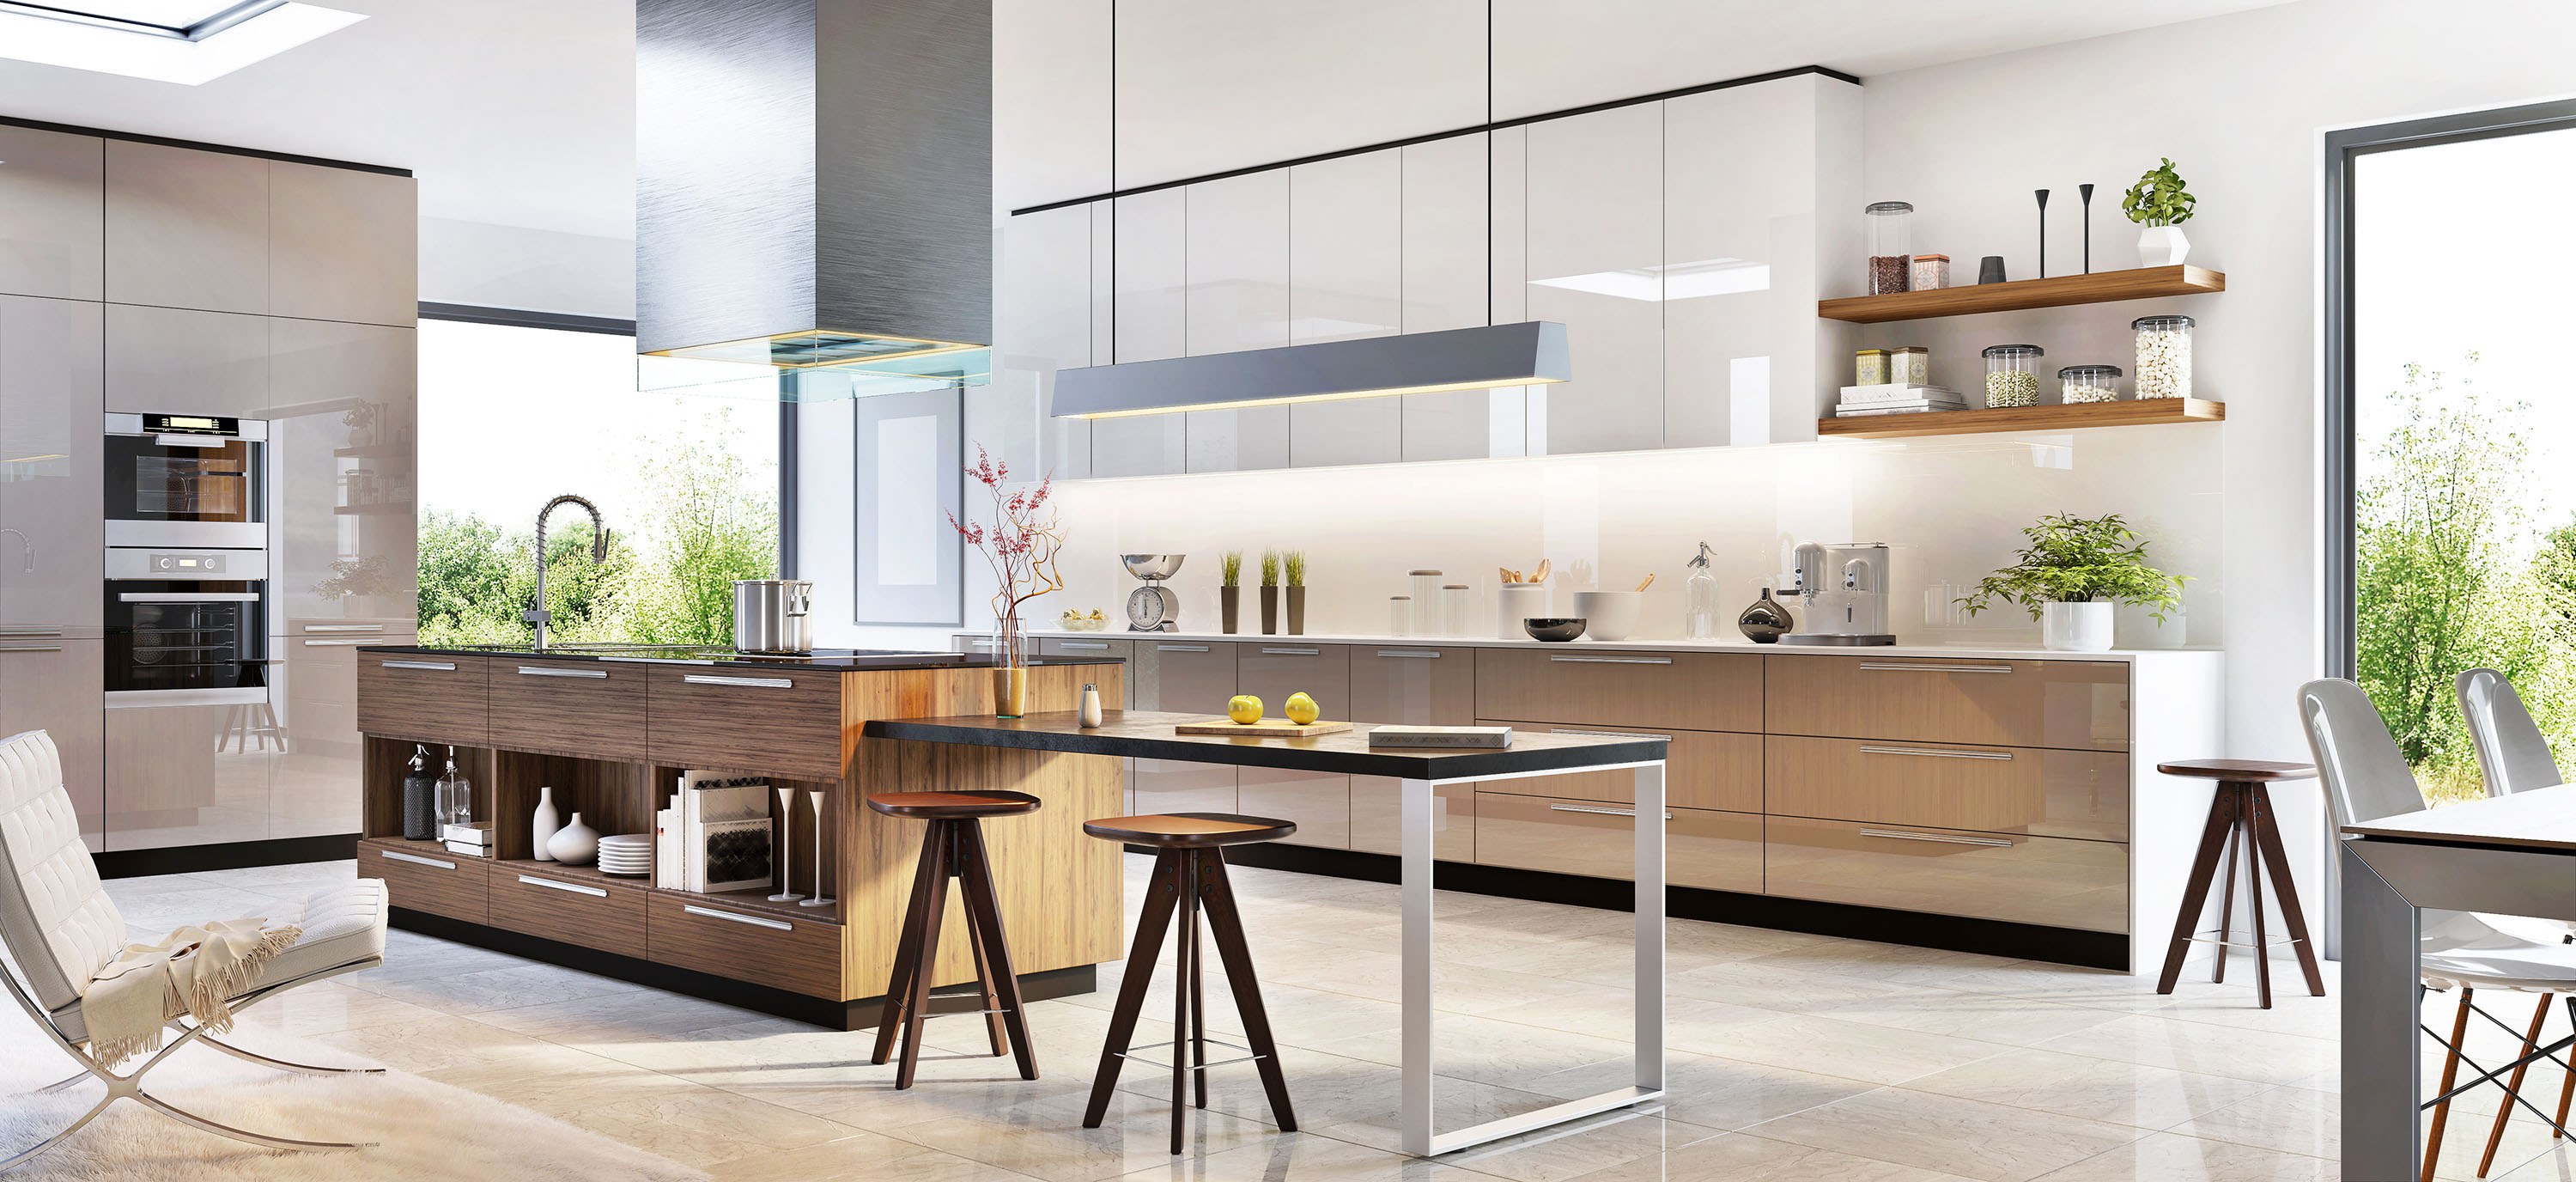 2022 12 19 kitchen open concept modern oversized